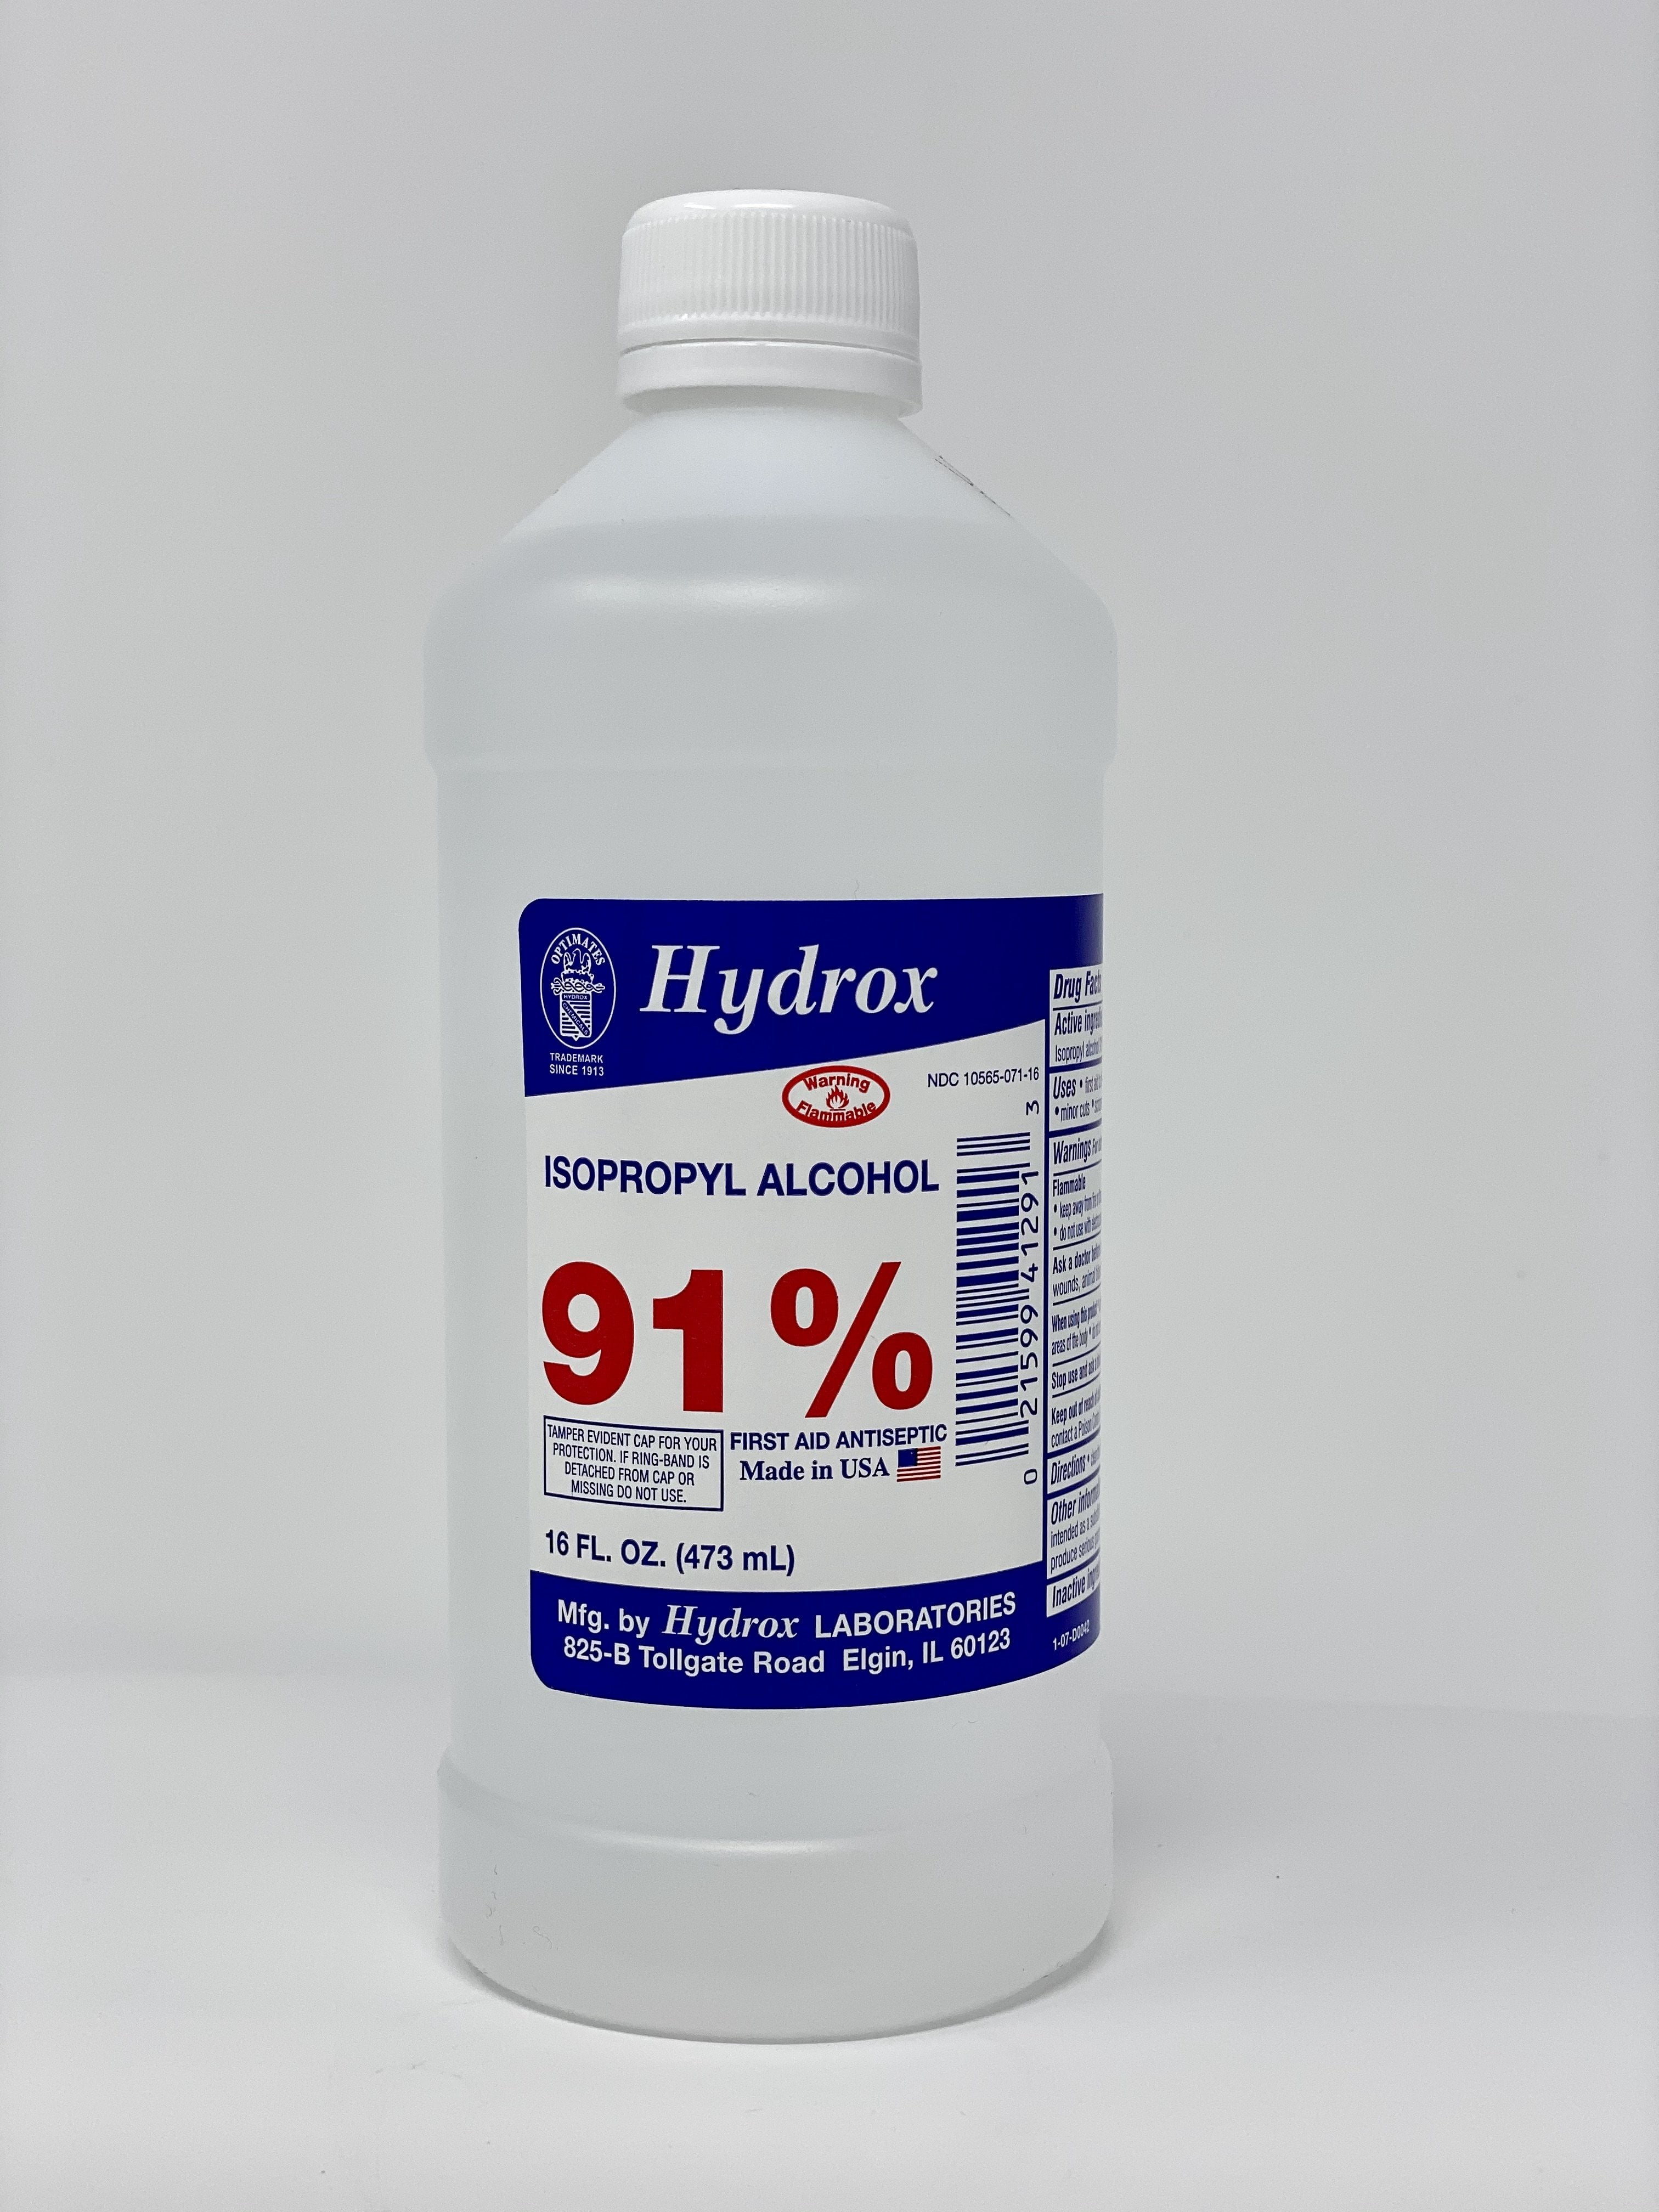 Rite Aid Brand 91% Isopropyl Alcohol - 10oz